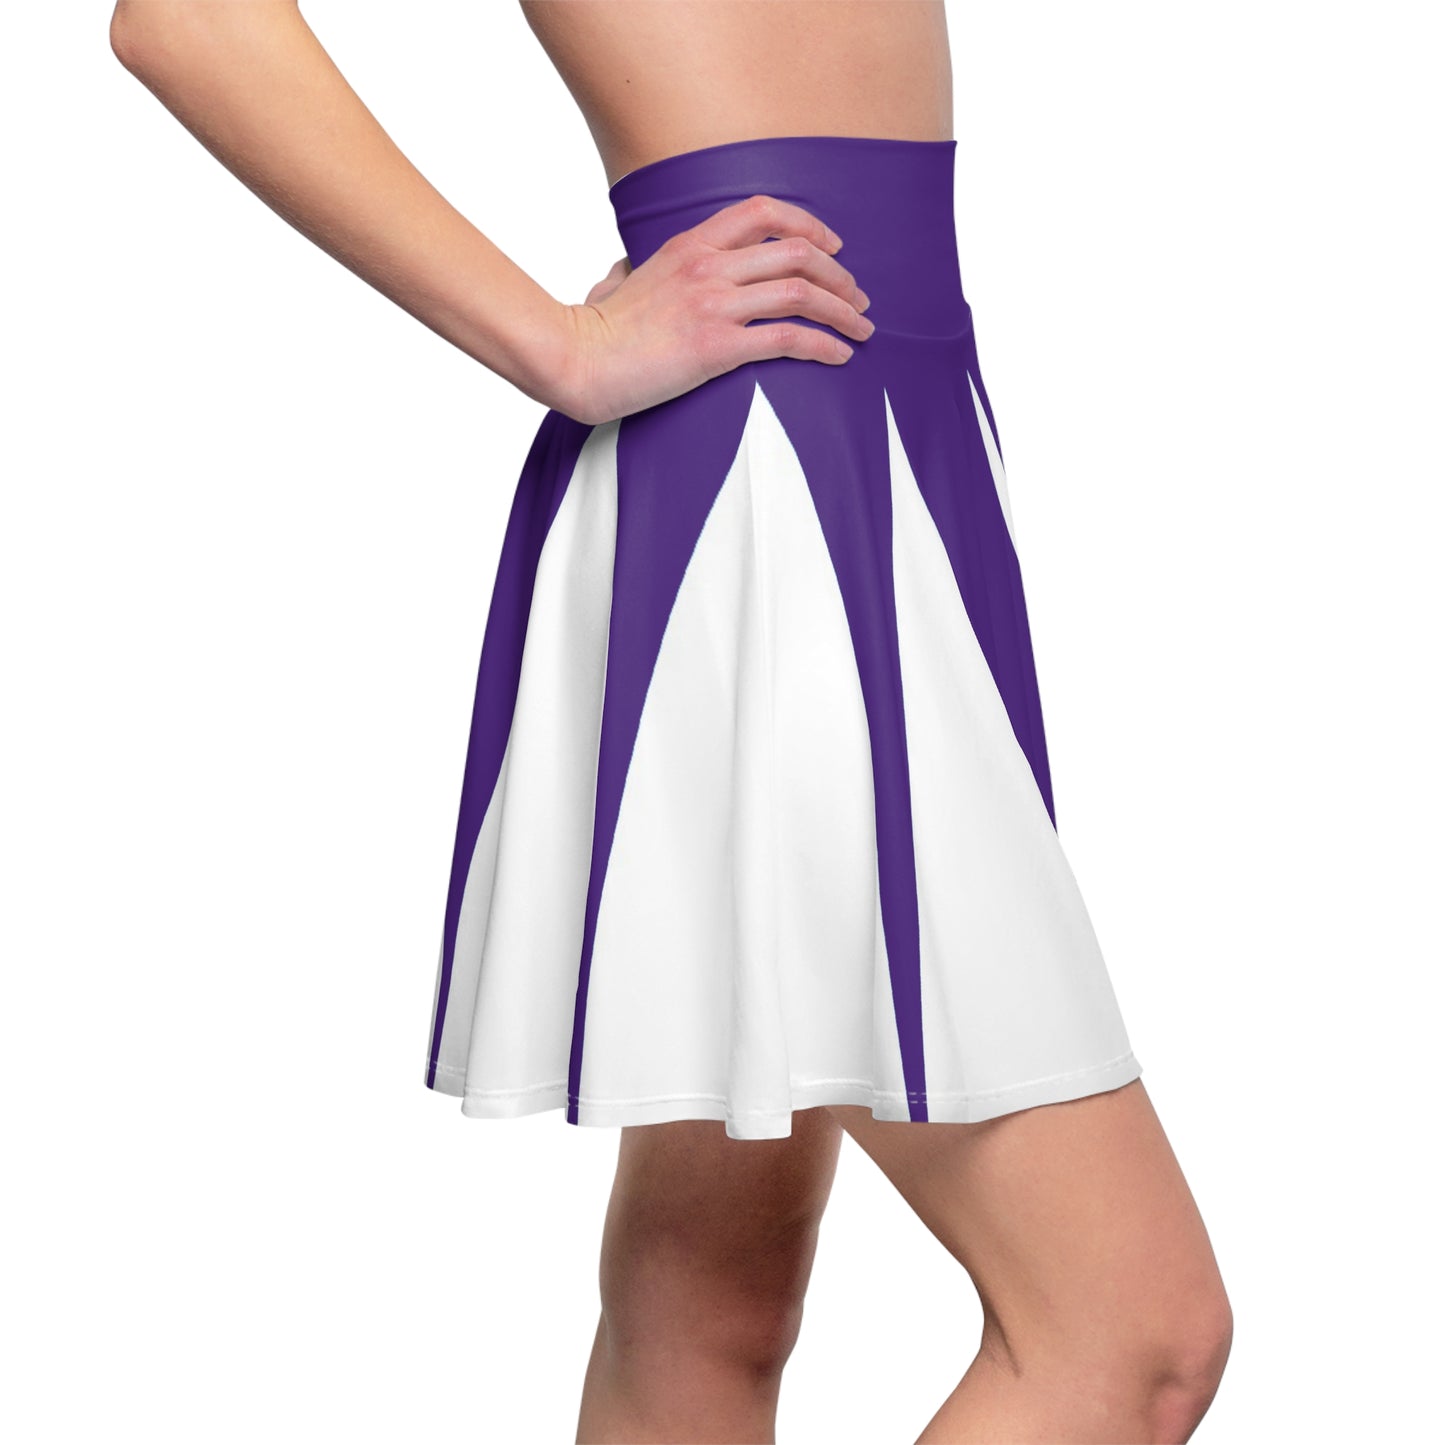 Purple skirt for Cheers